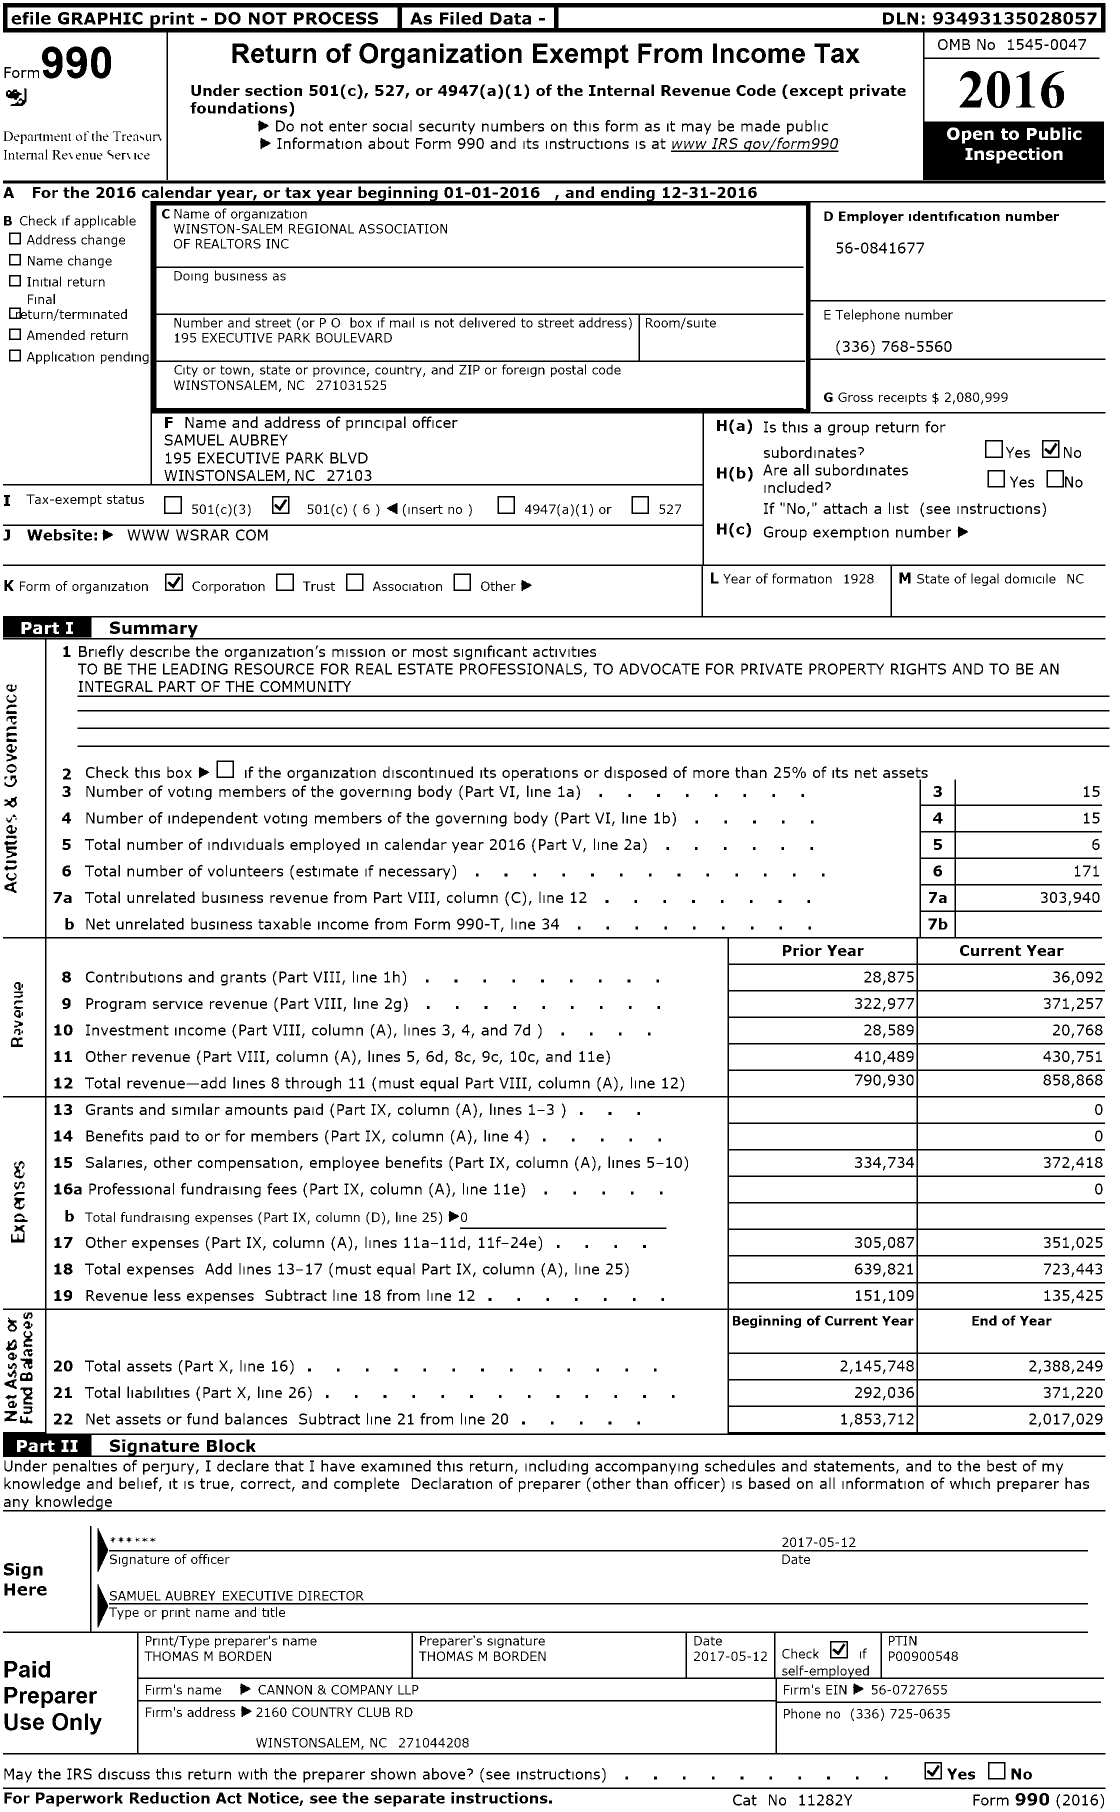 Image of first page of 2016 Form 990O for Winston-Salem Regional Association of Realtors